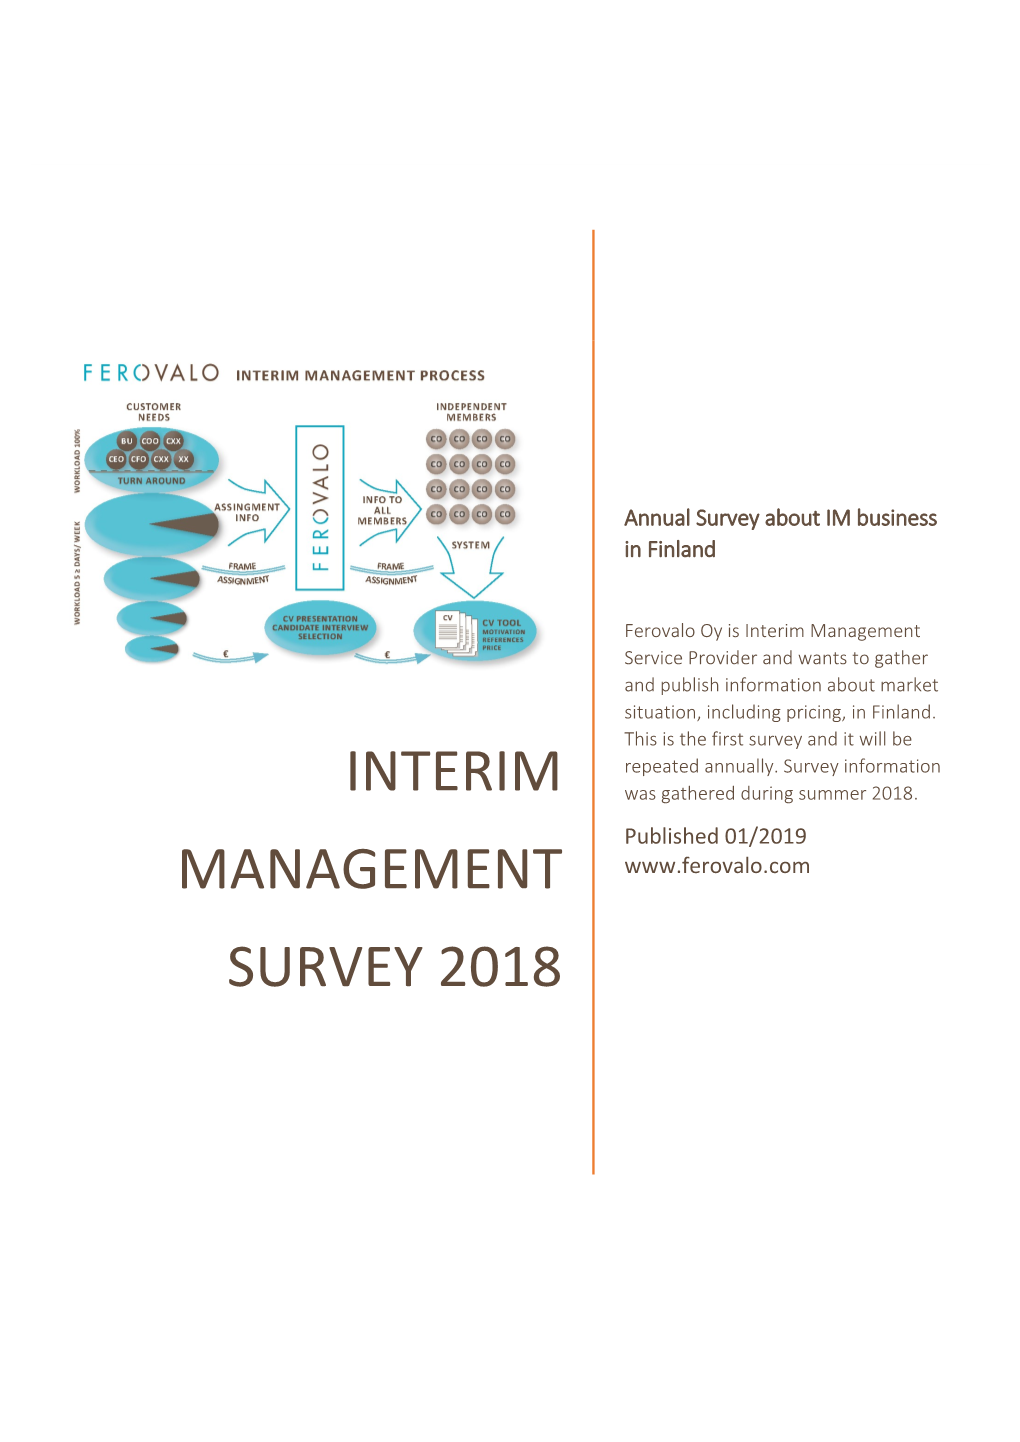 INTERIM MANAGEMENT SURVEY 2018 Survey by Ferovalo Oy Fall 2018